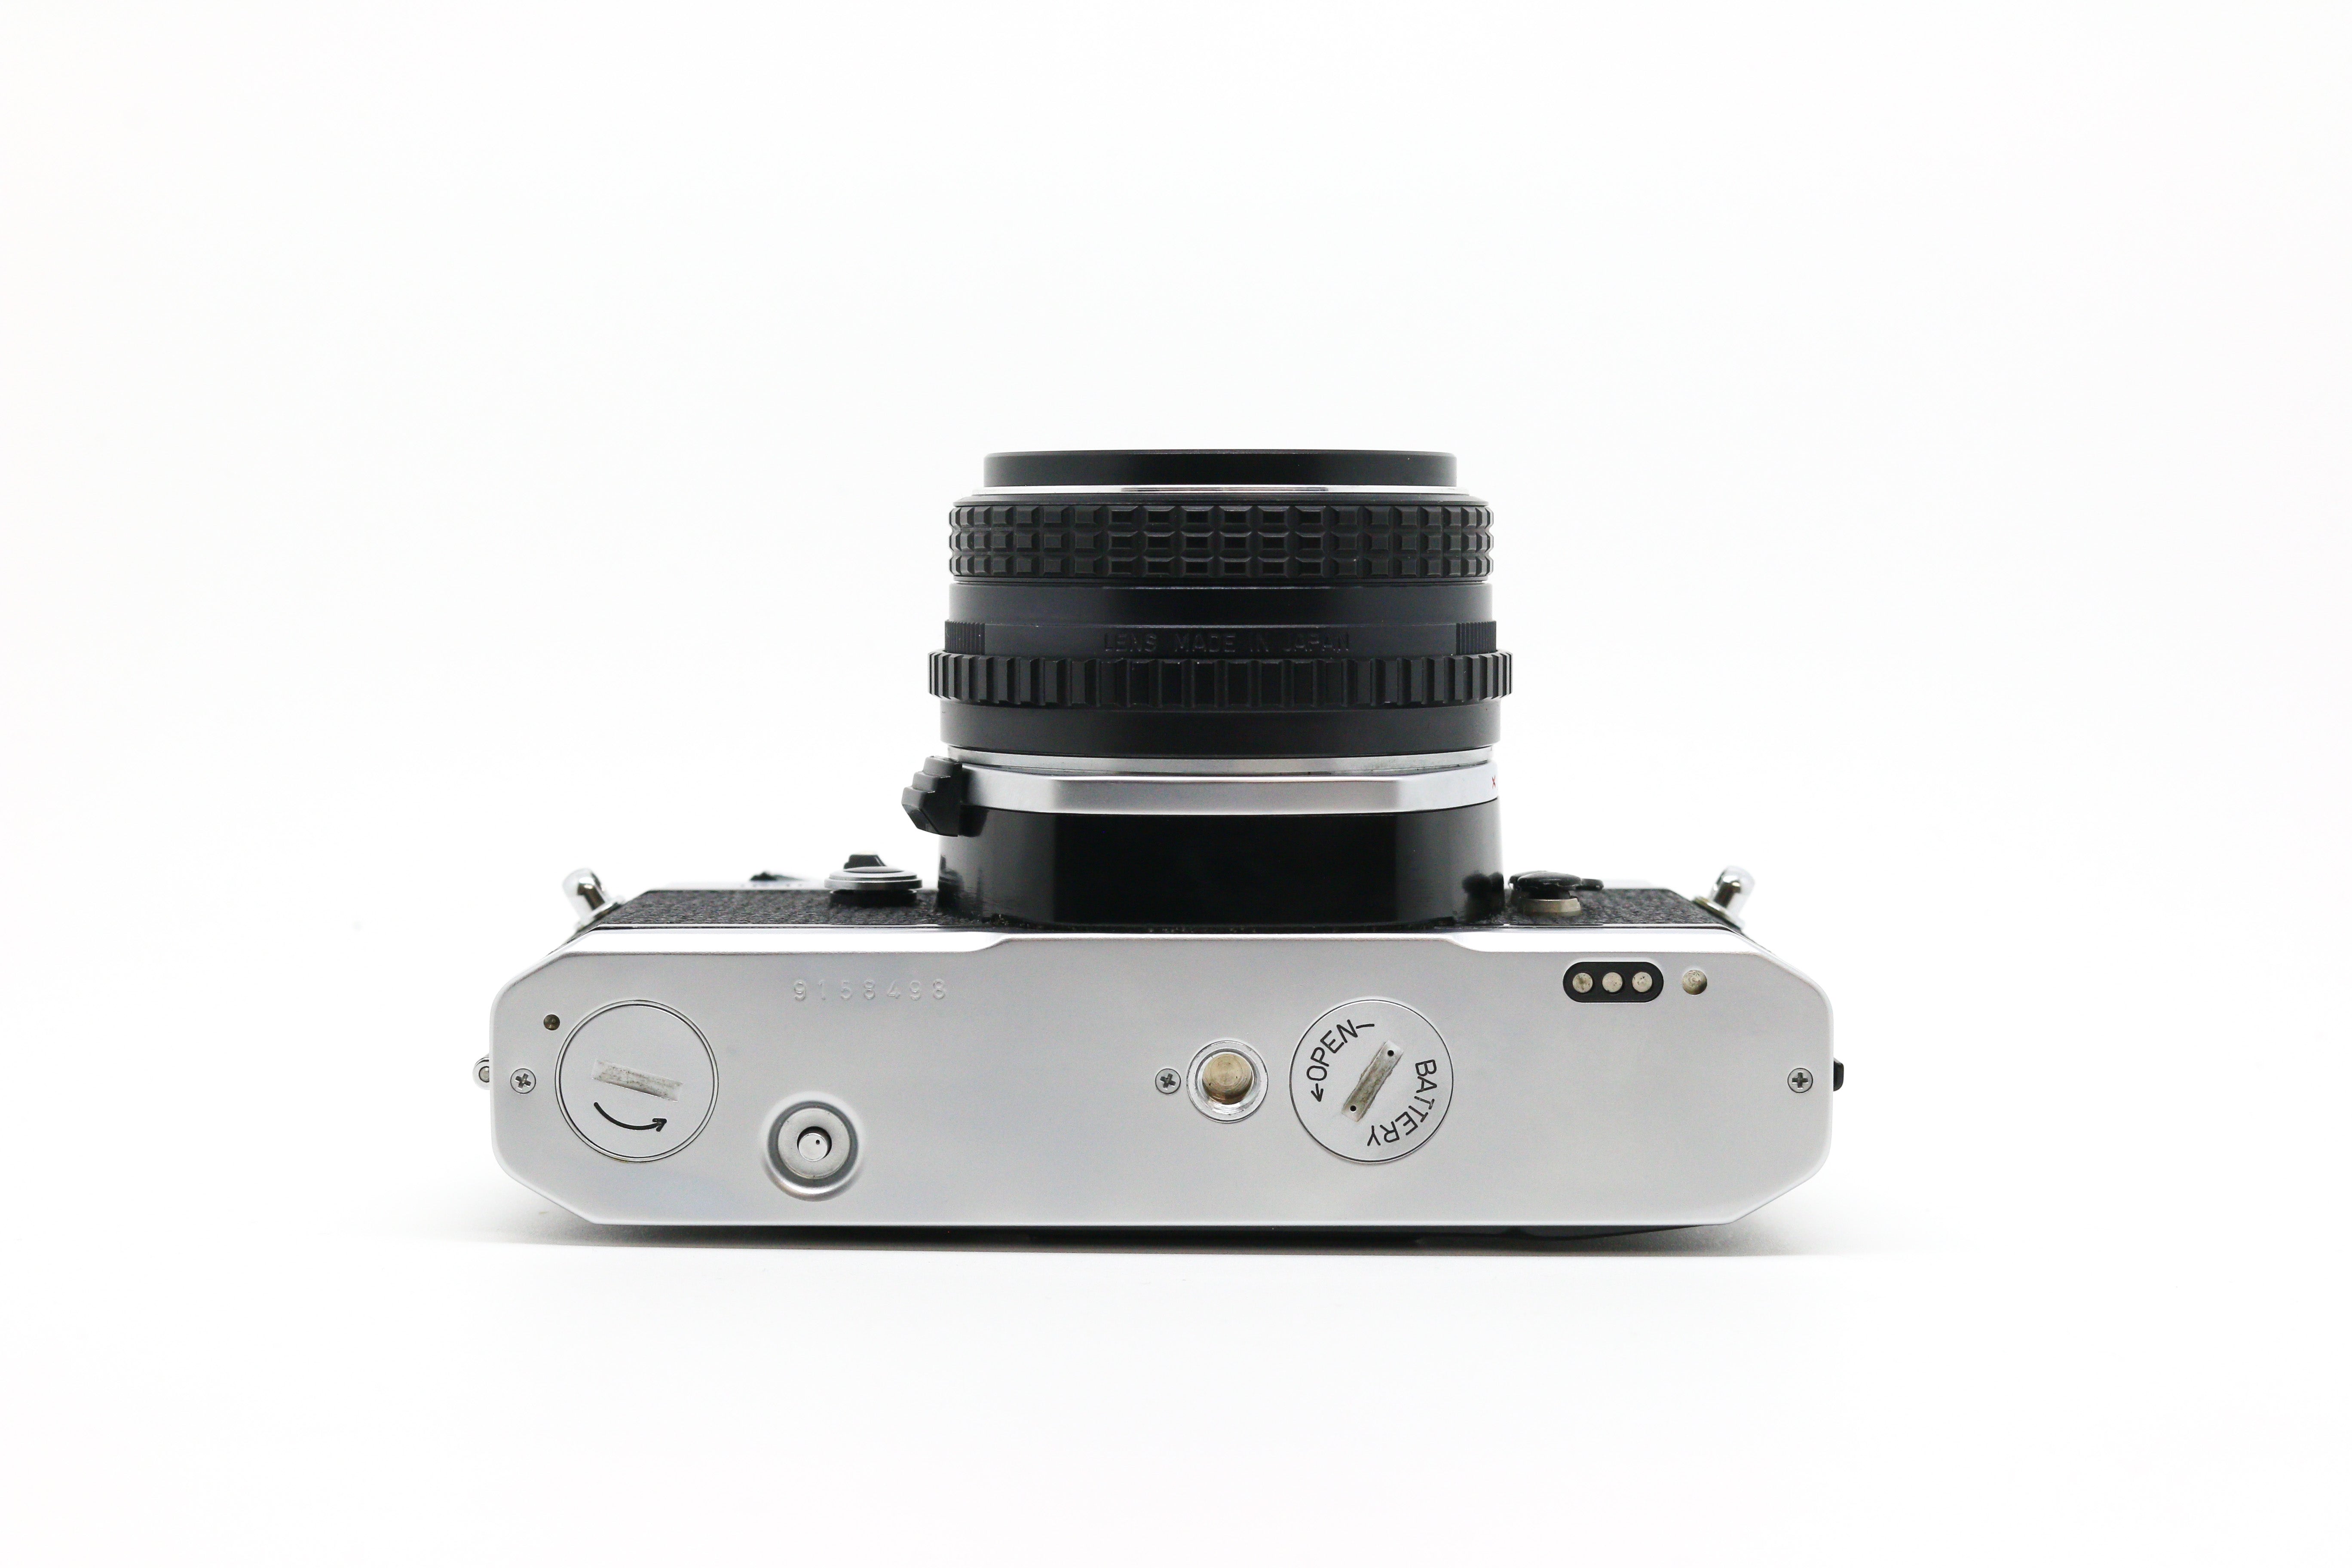 Pentax ME Super w/50mm 1.7 SMC Lens